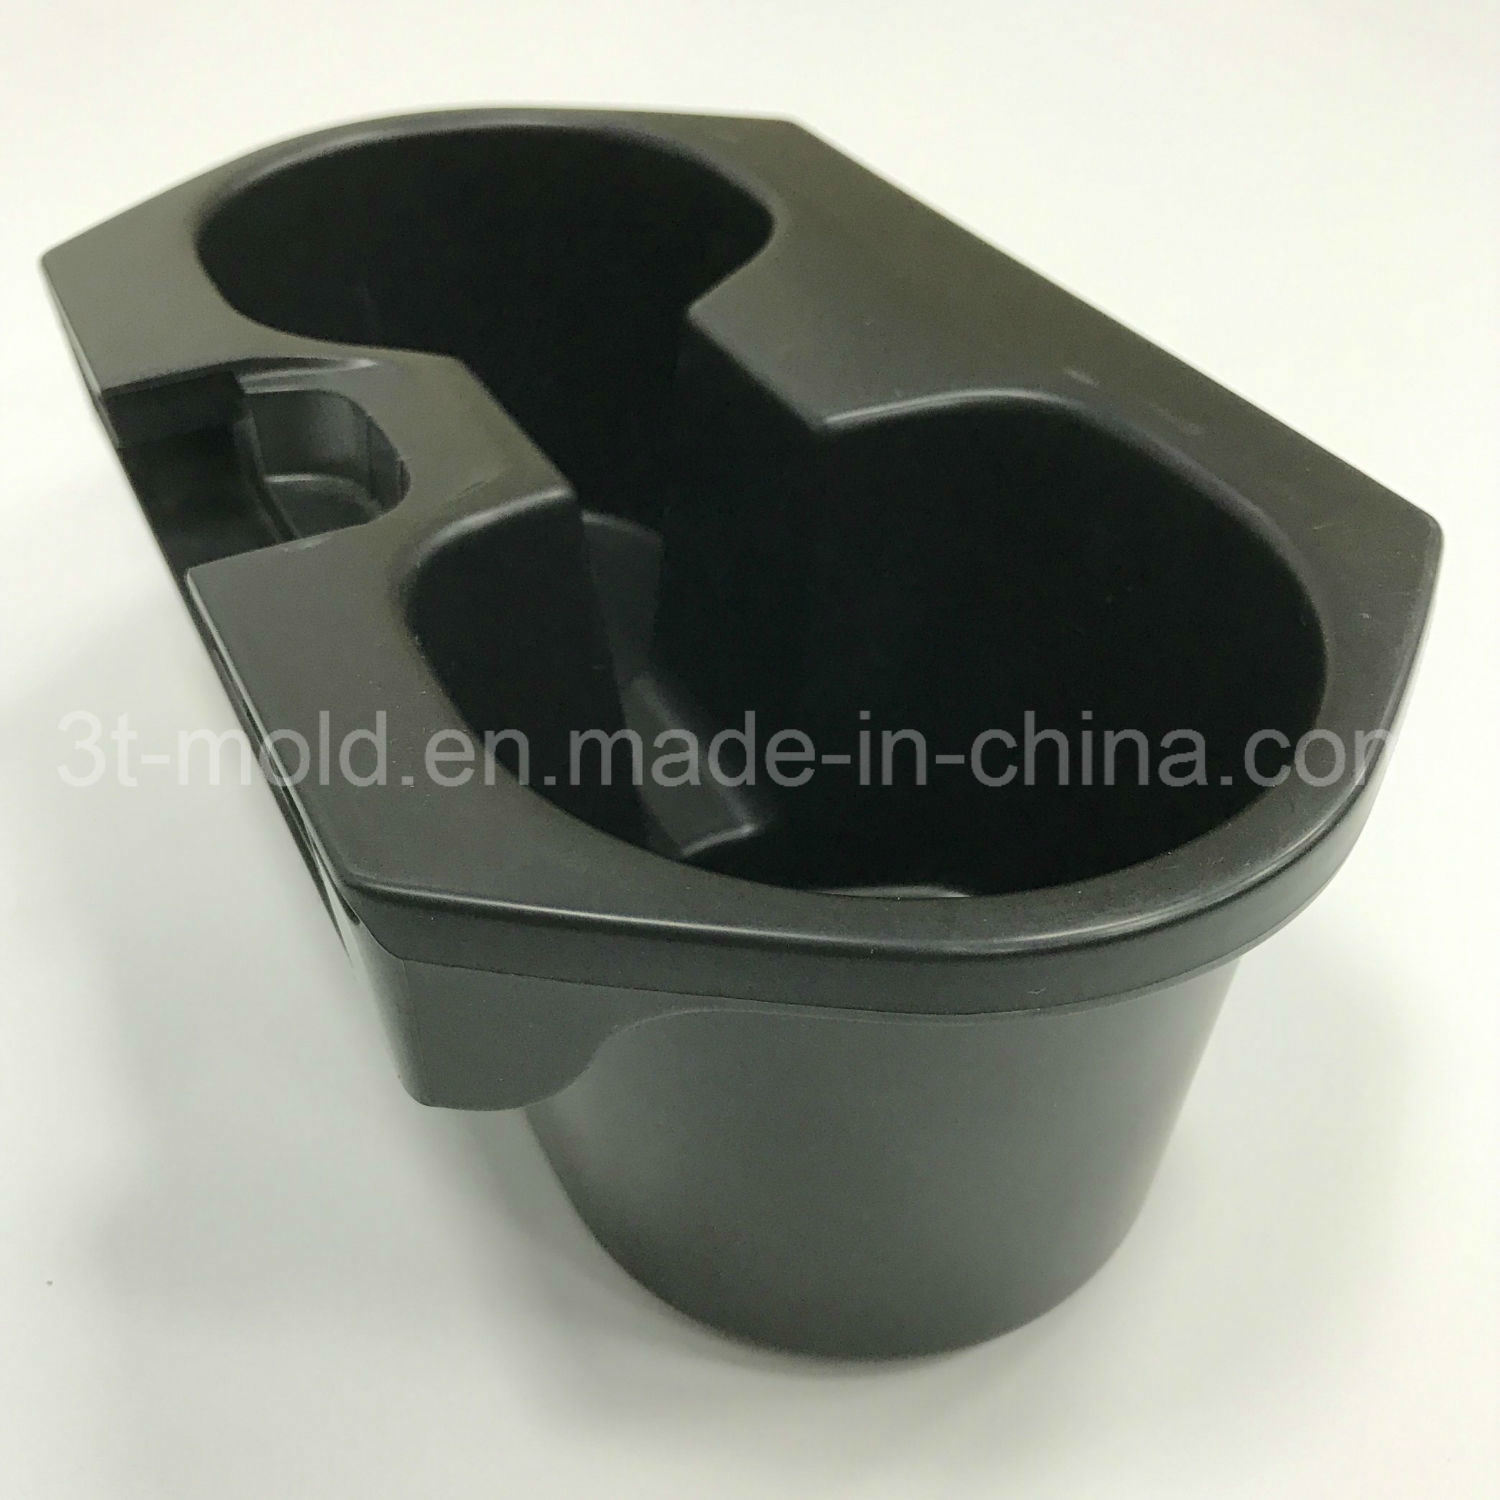 /proimages/2f0j00LtSGqTQBsYbm/automotive-cup-holder-plastic-injection-mold.jpg